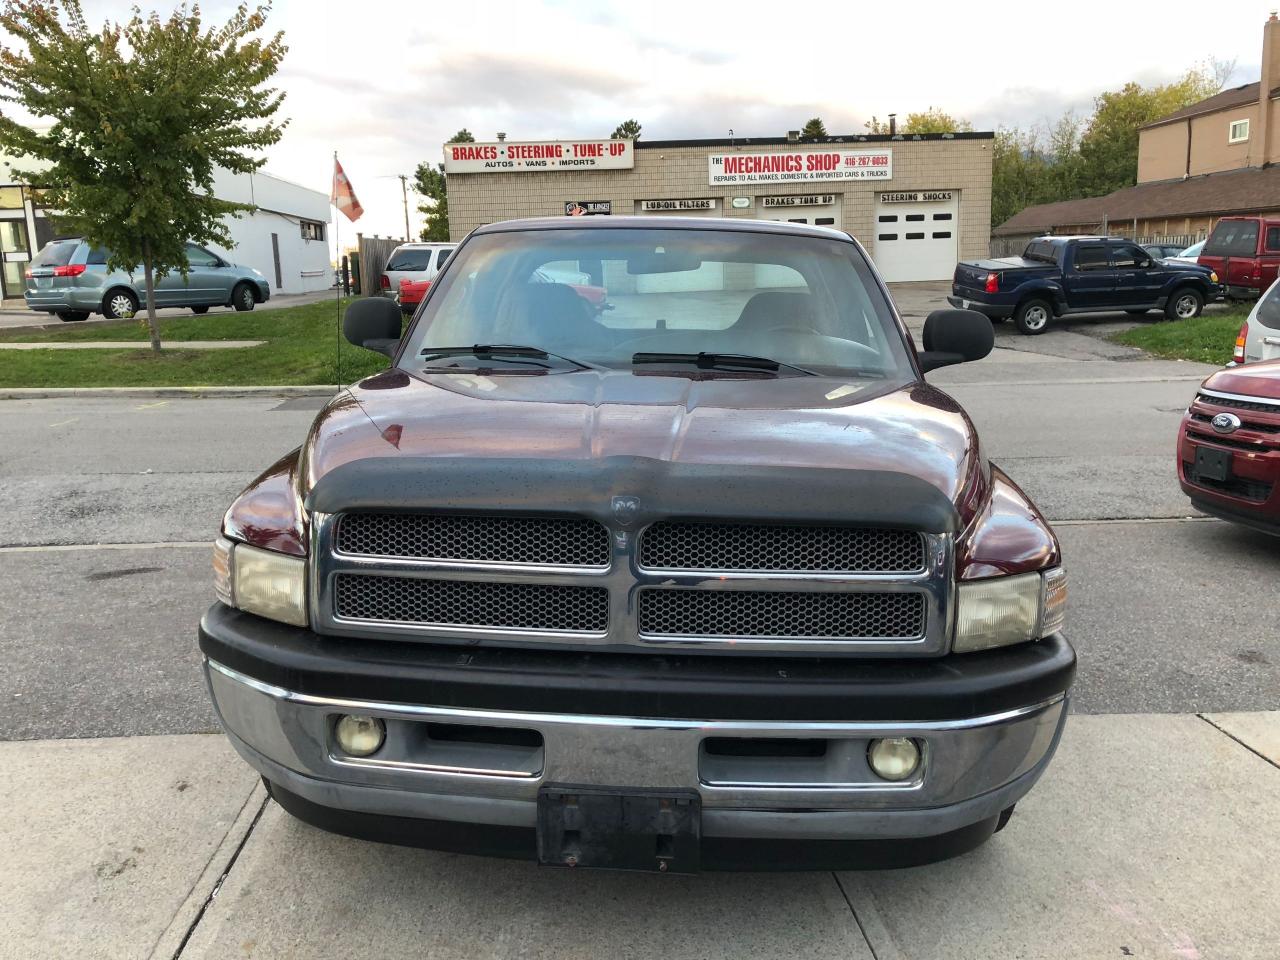 2001 Dodge Ram 1500 For Sale In Ontario